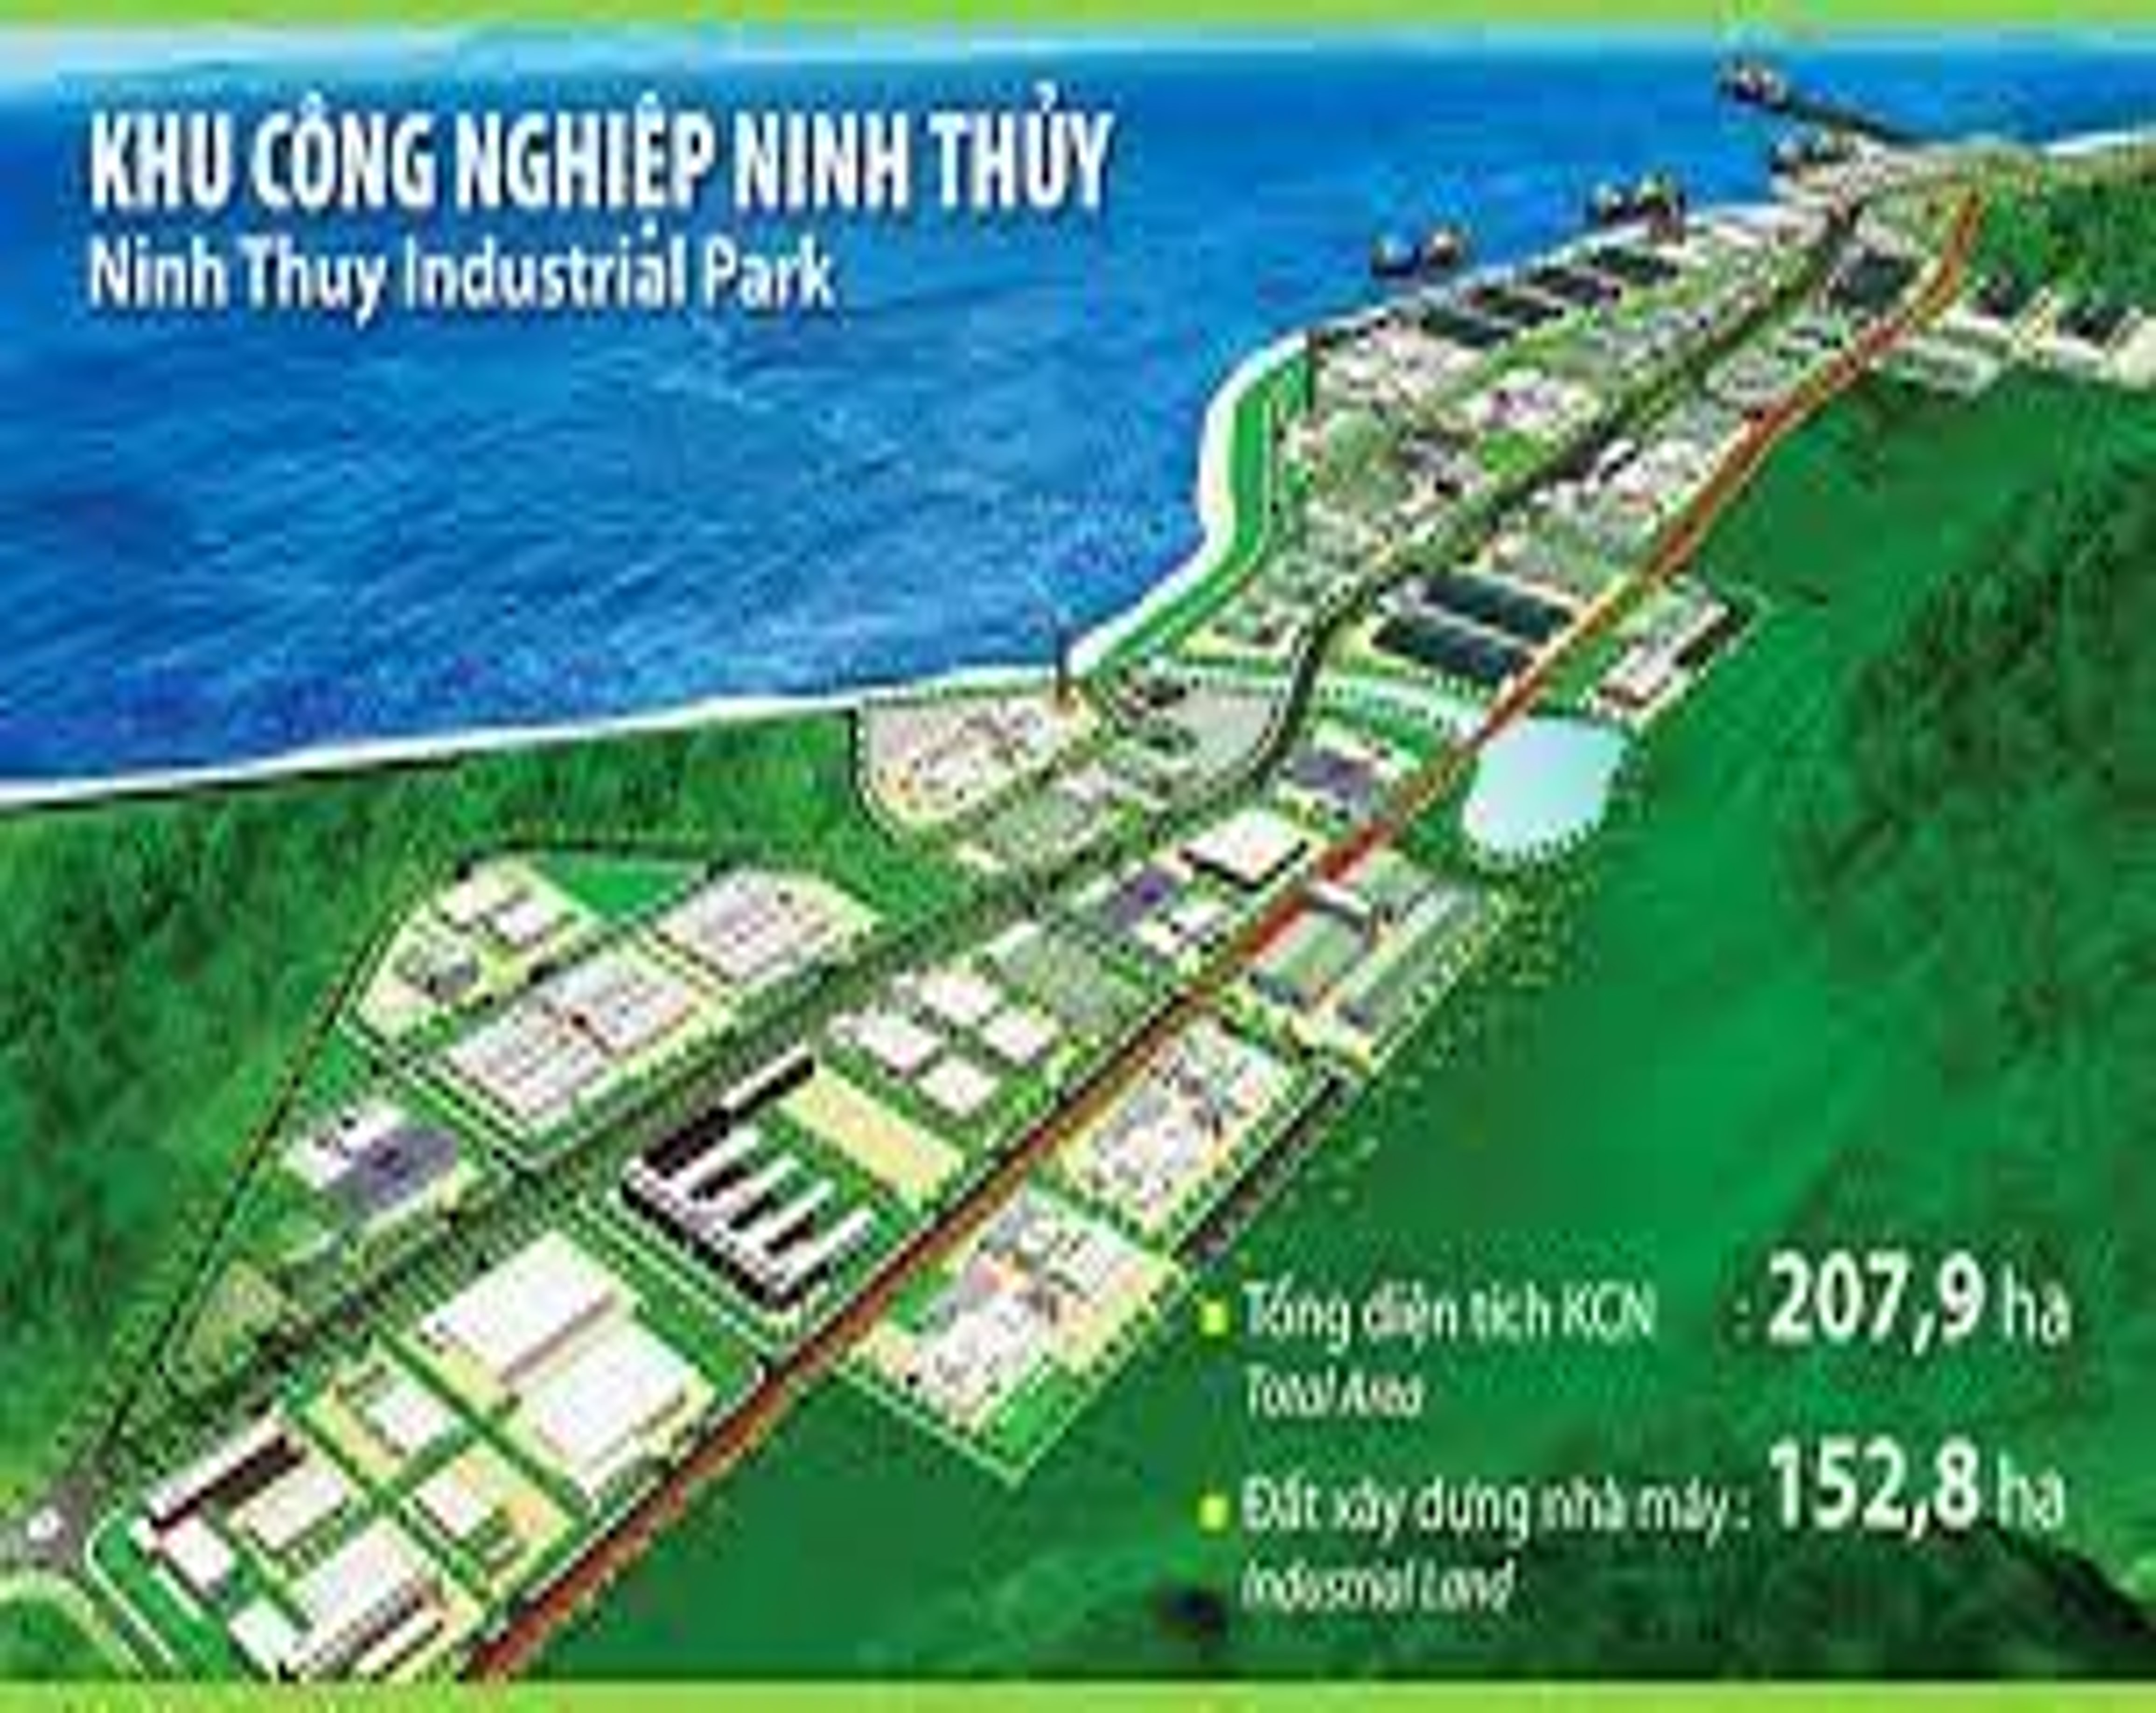 Ninh Thuy Industrial Park